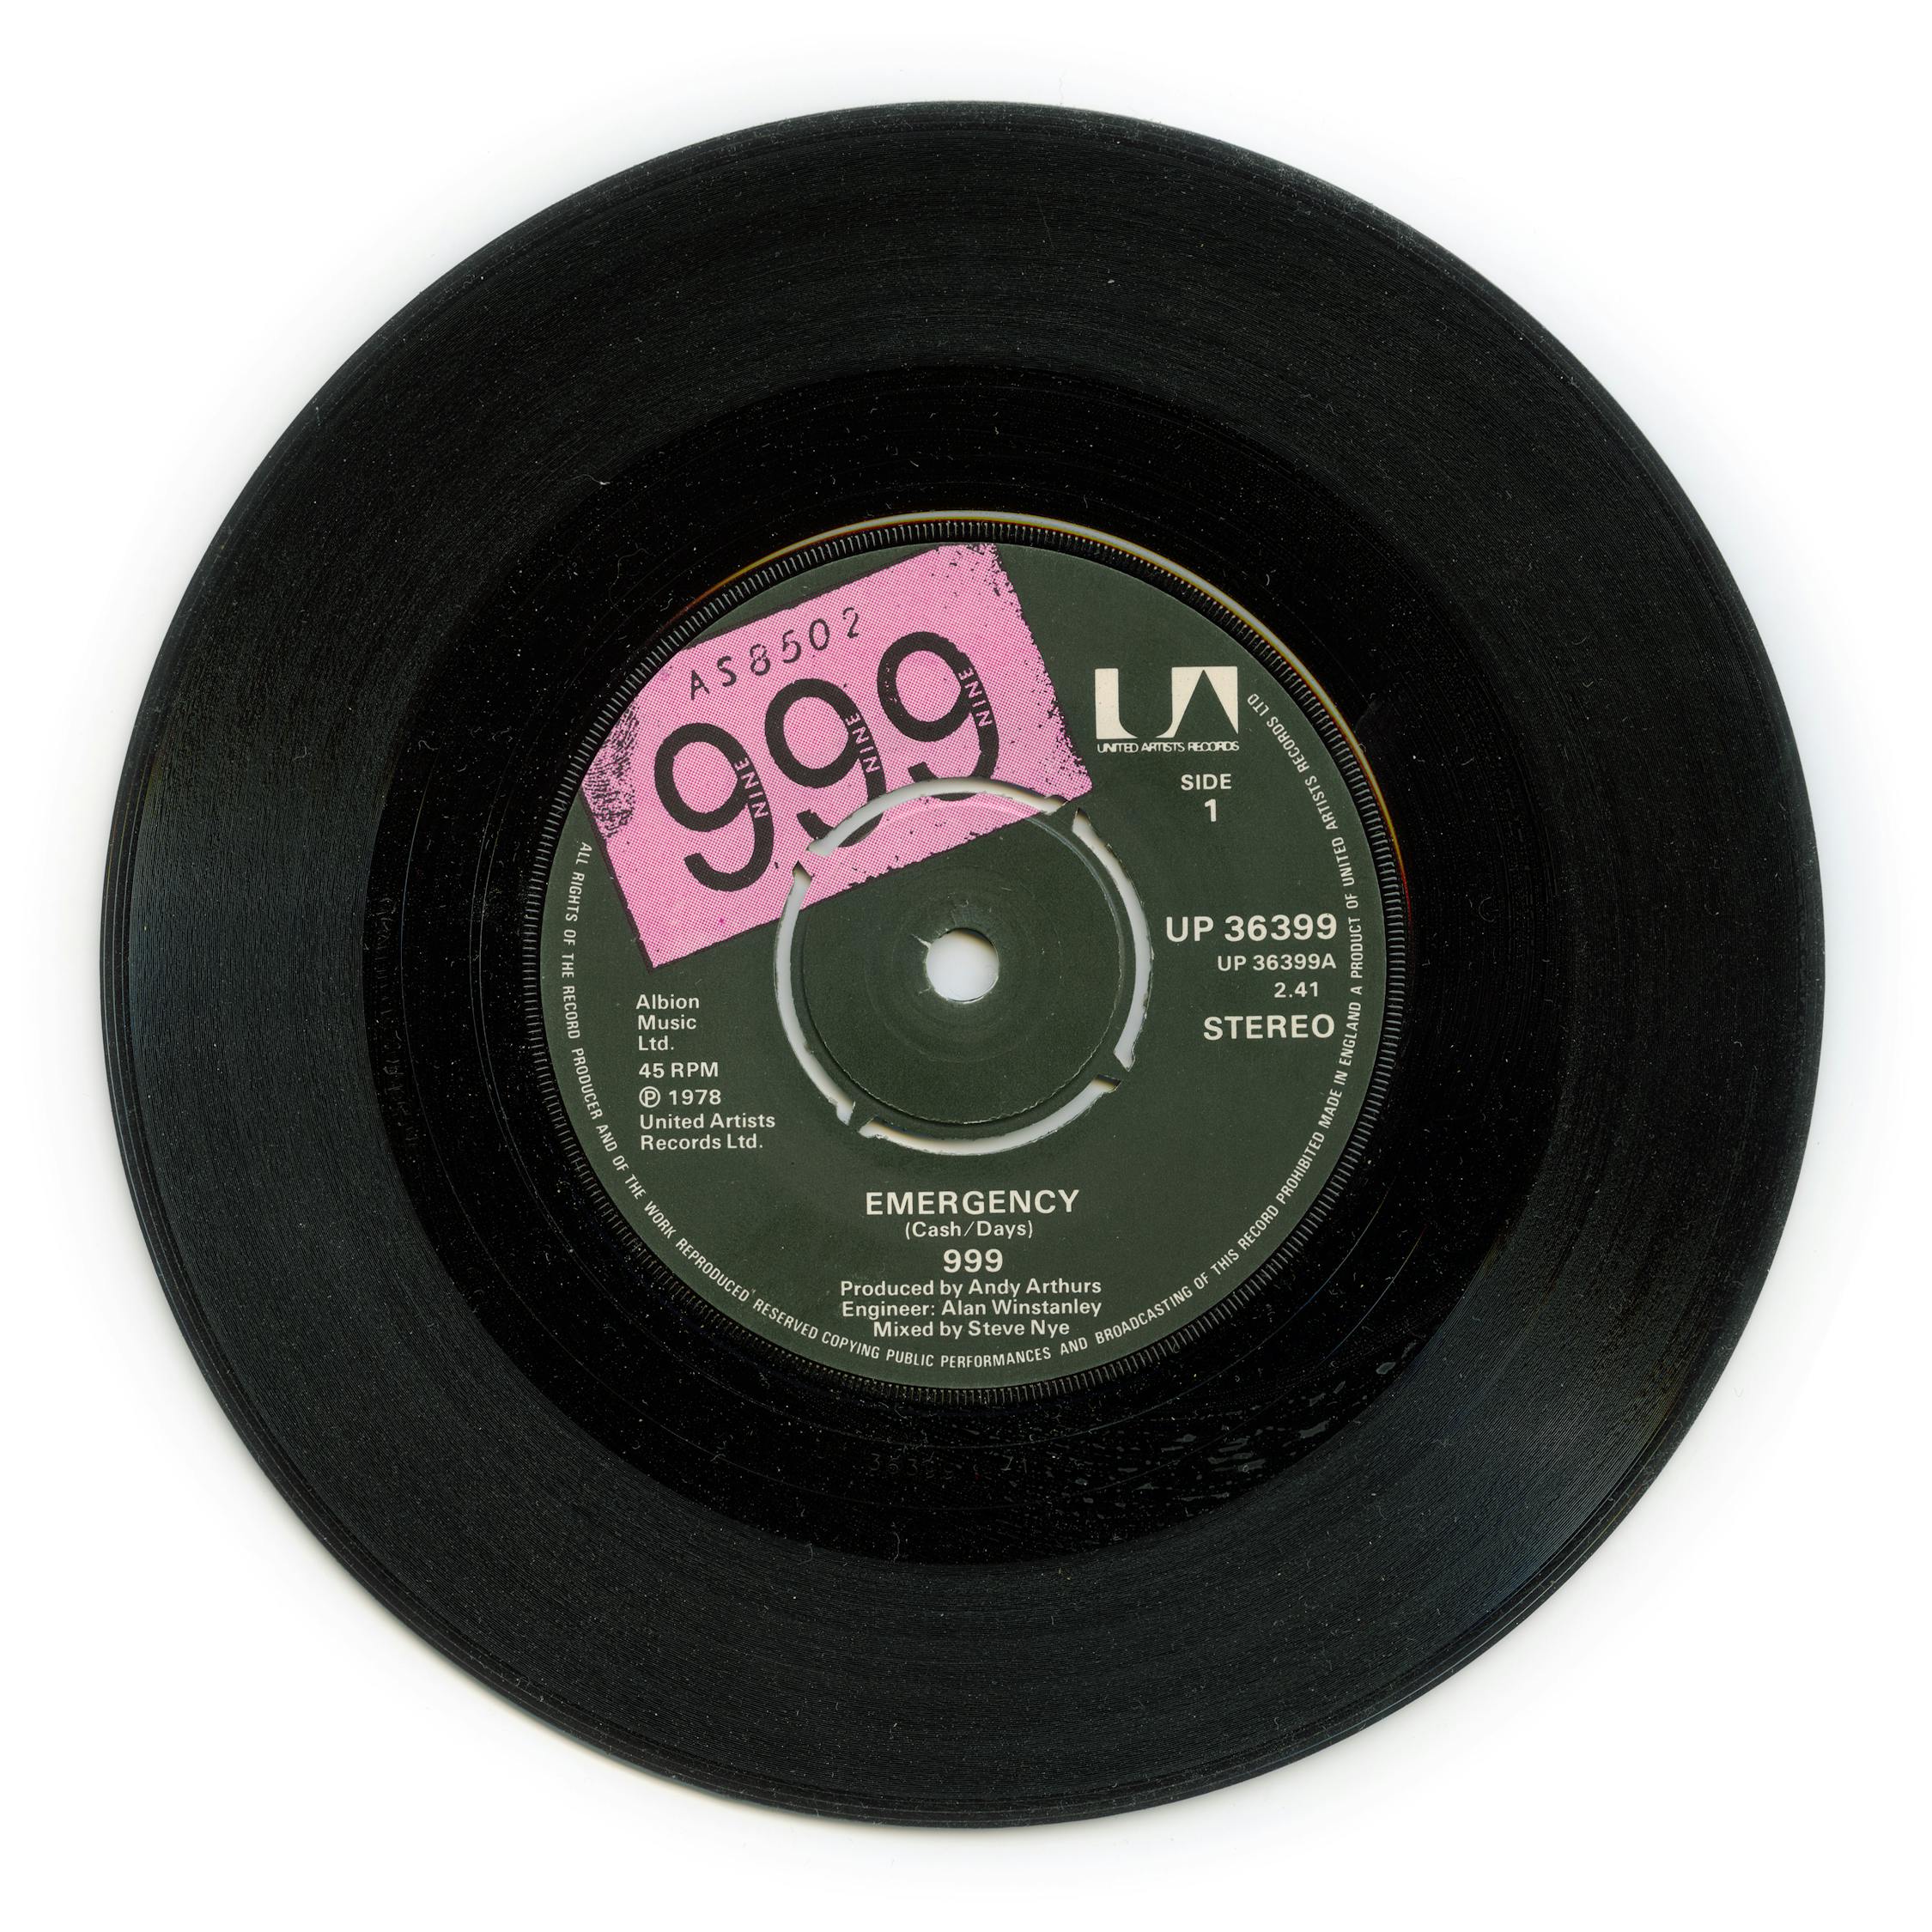 Black And Gray Vinyl Record · Free Stock Photo